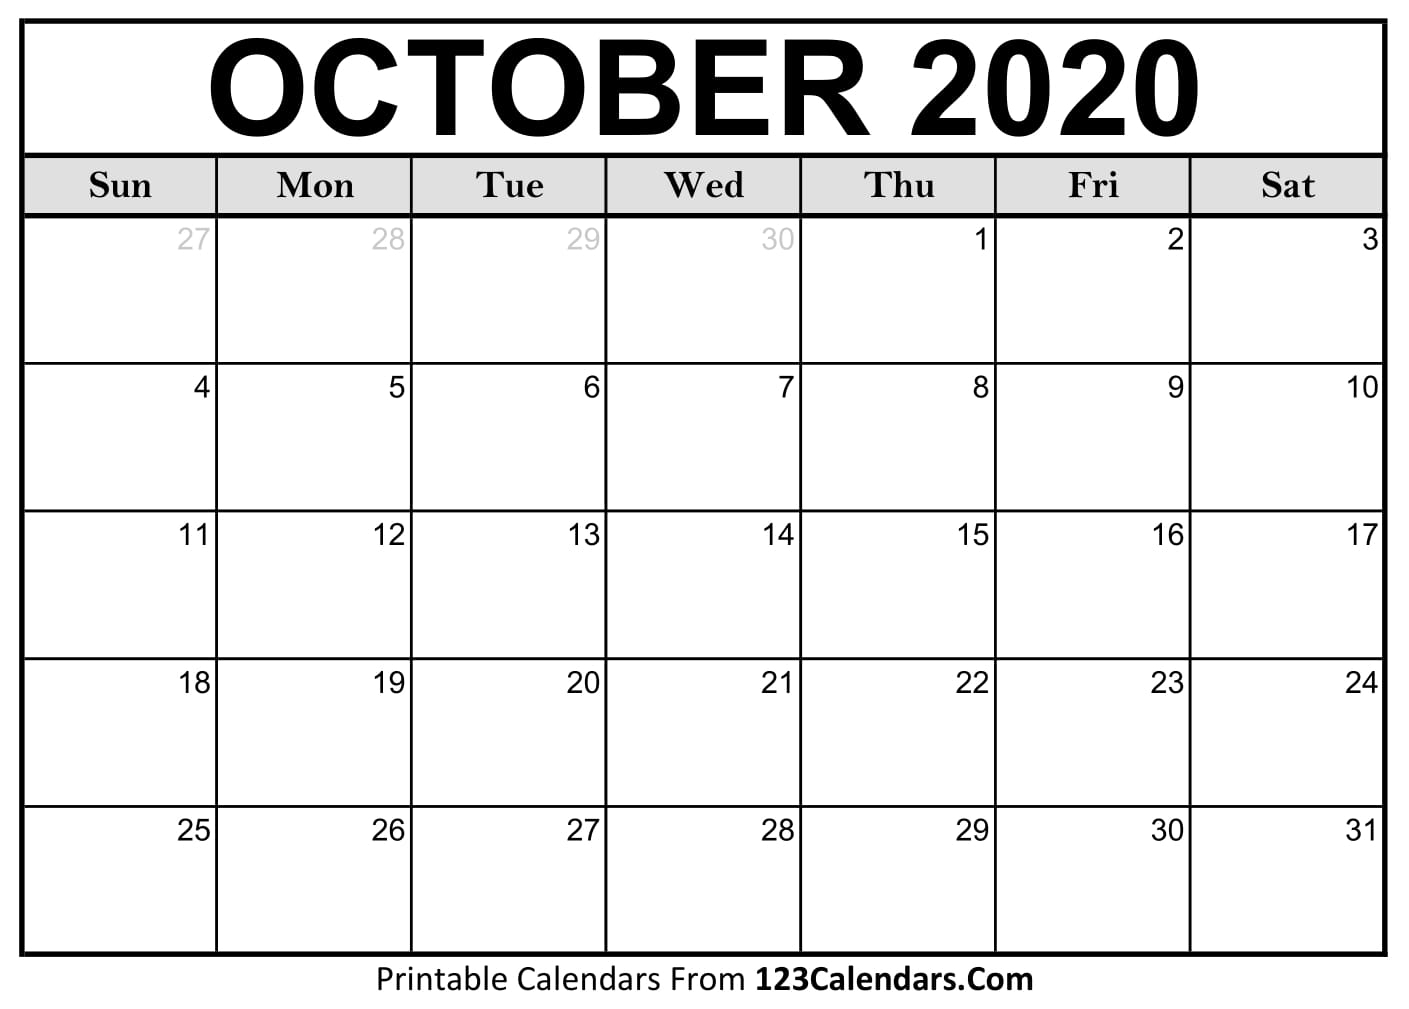 October 2020 Printable Calendar | 123Calendars